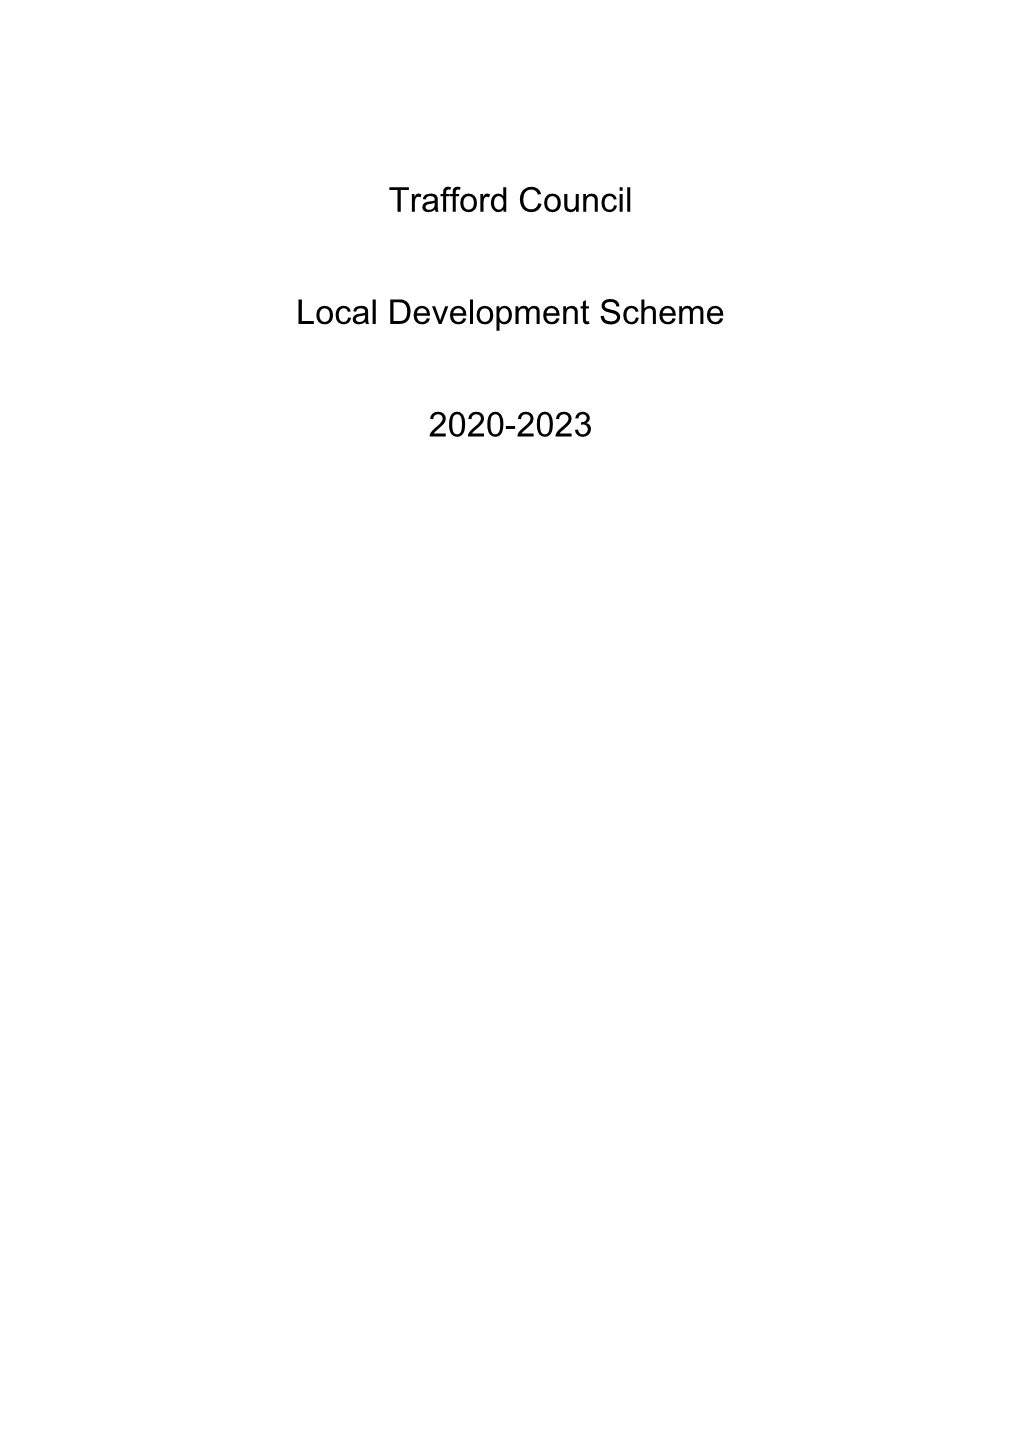 Trafford Council Local Development Scheme 2020-2023